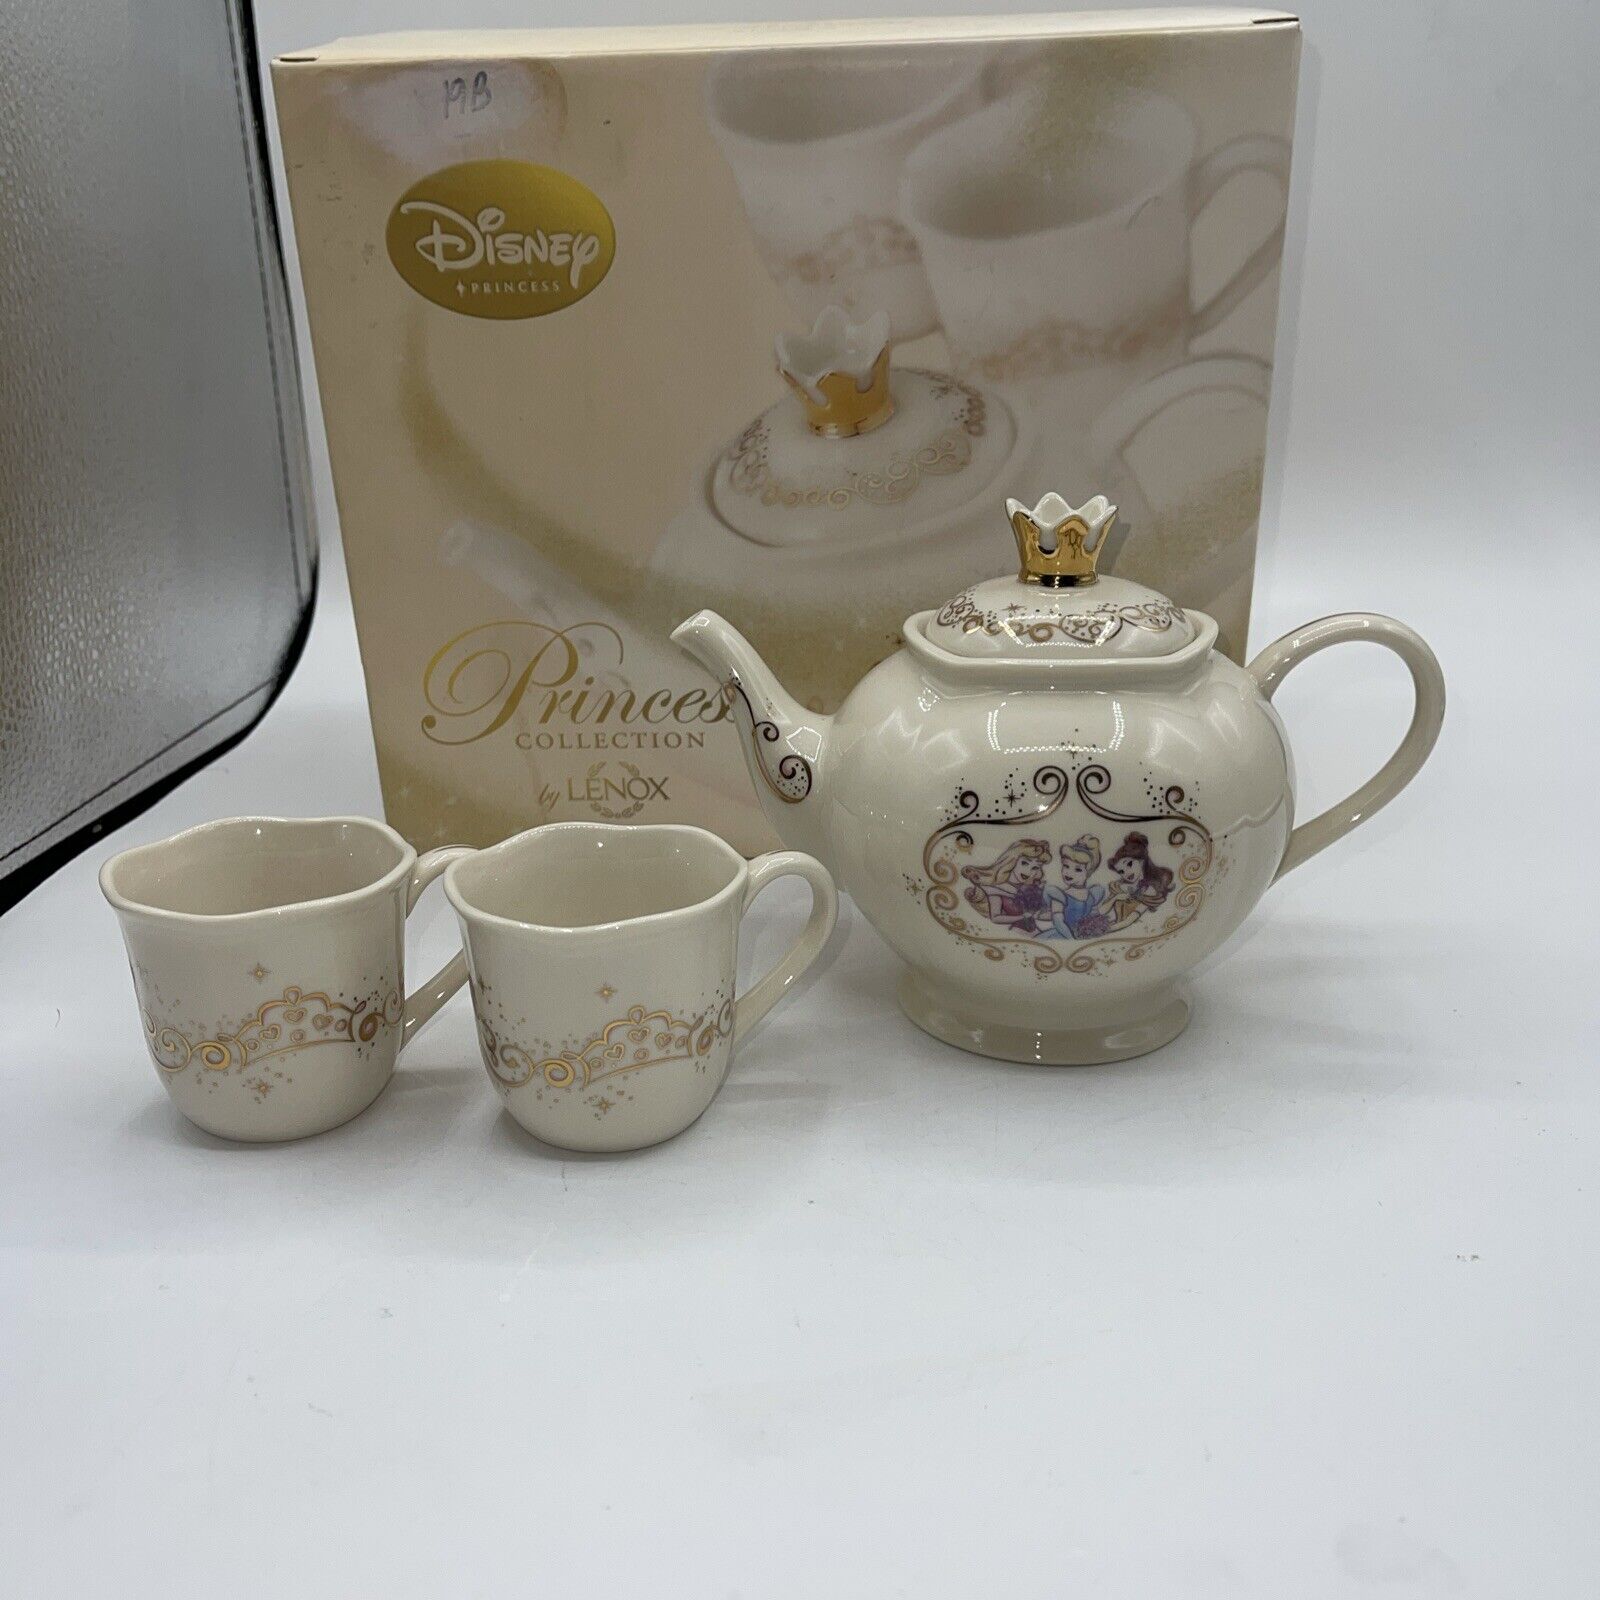 Lenox Disney Showcase Collection Princess Tea Set (3 pieces) Brand New